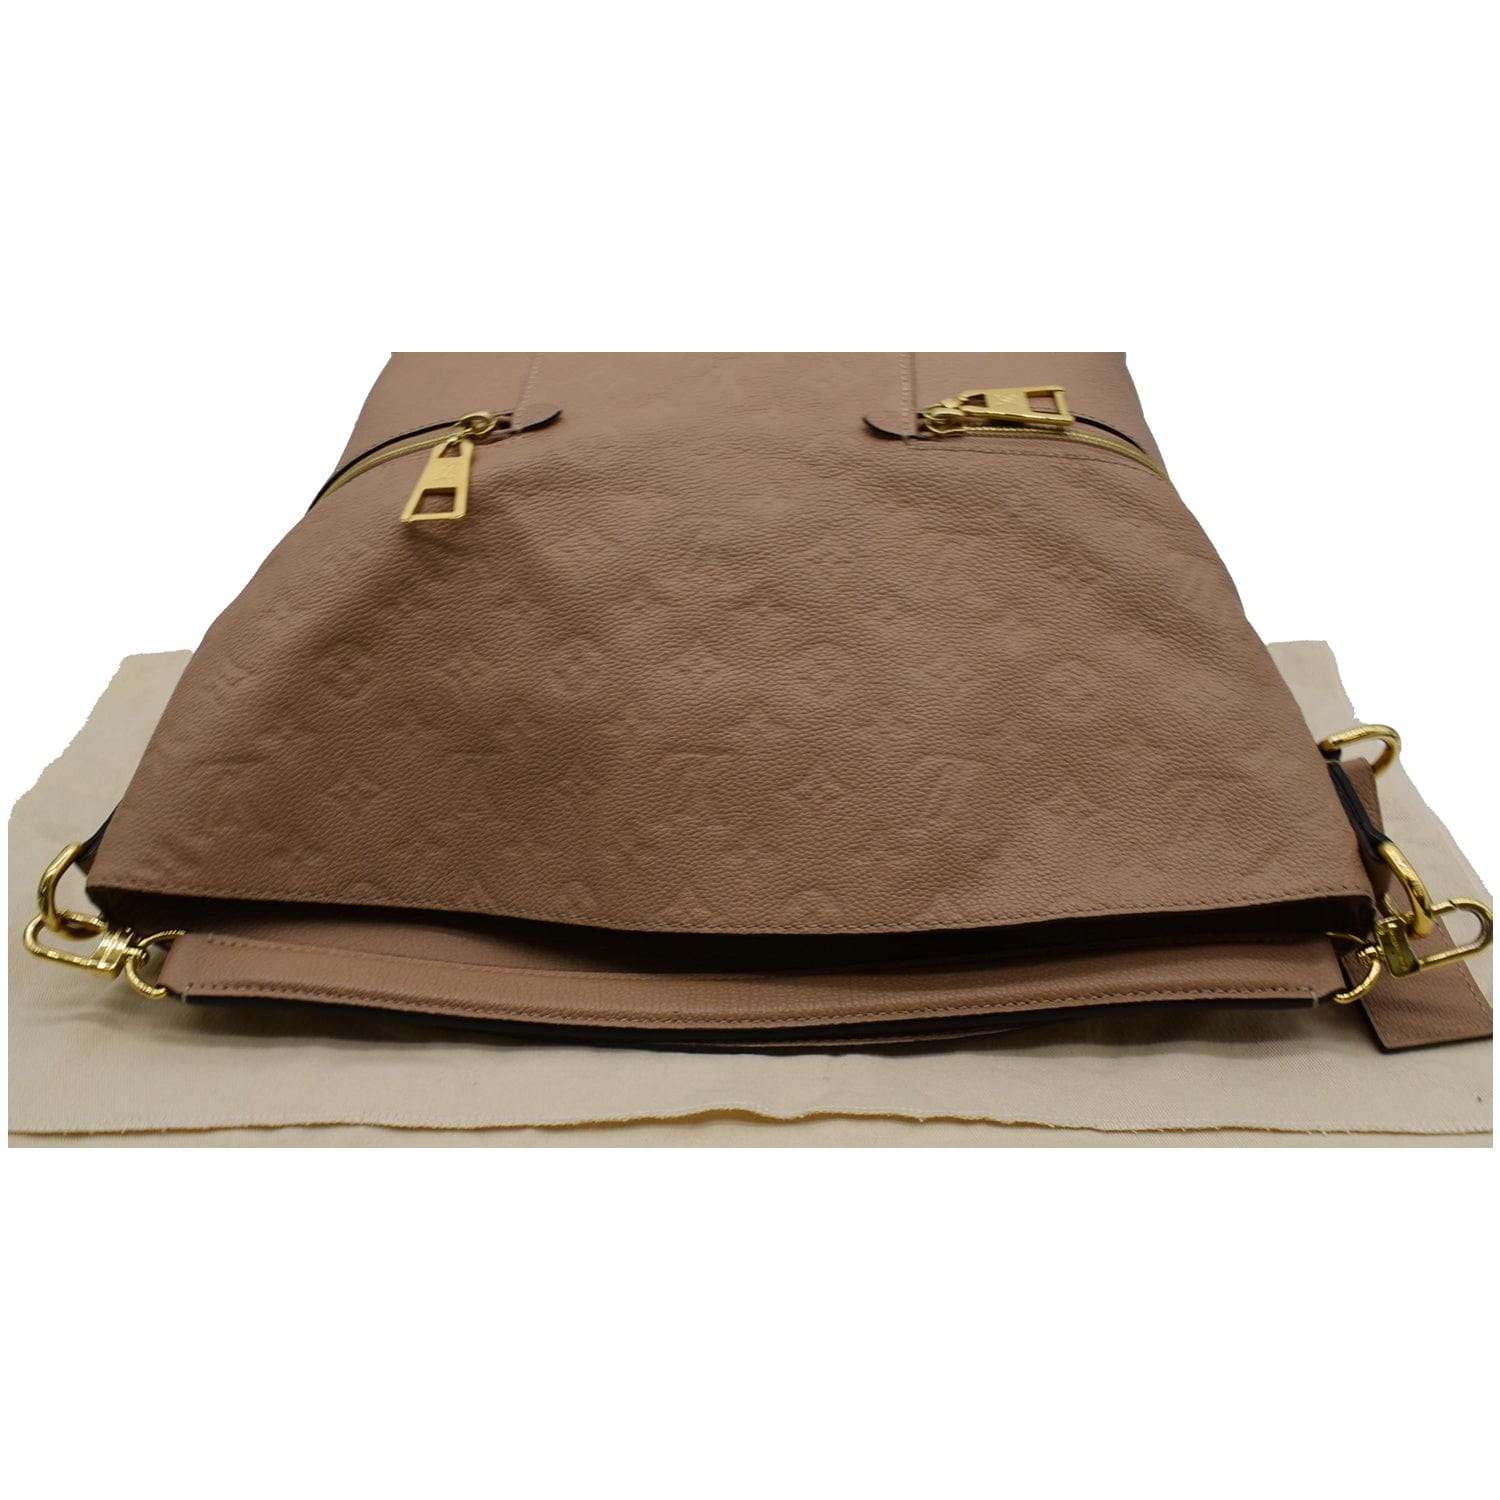 Louis Vuitton Melie Navy Leather Empreinte Hobo Bag ,Monogram Leather, In  Box